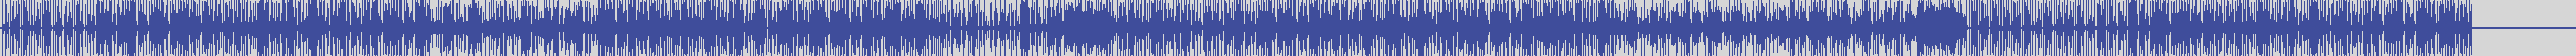 atomic_recordings [AR020] Memoriman (aka Uovo) - Got a Party [Uovo & Ohm Guru Remix] audio wave form